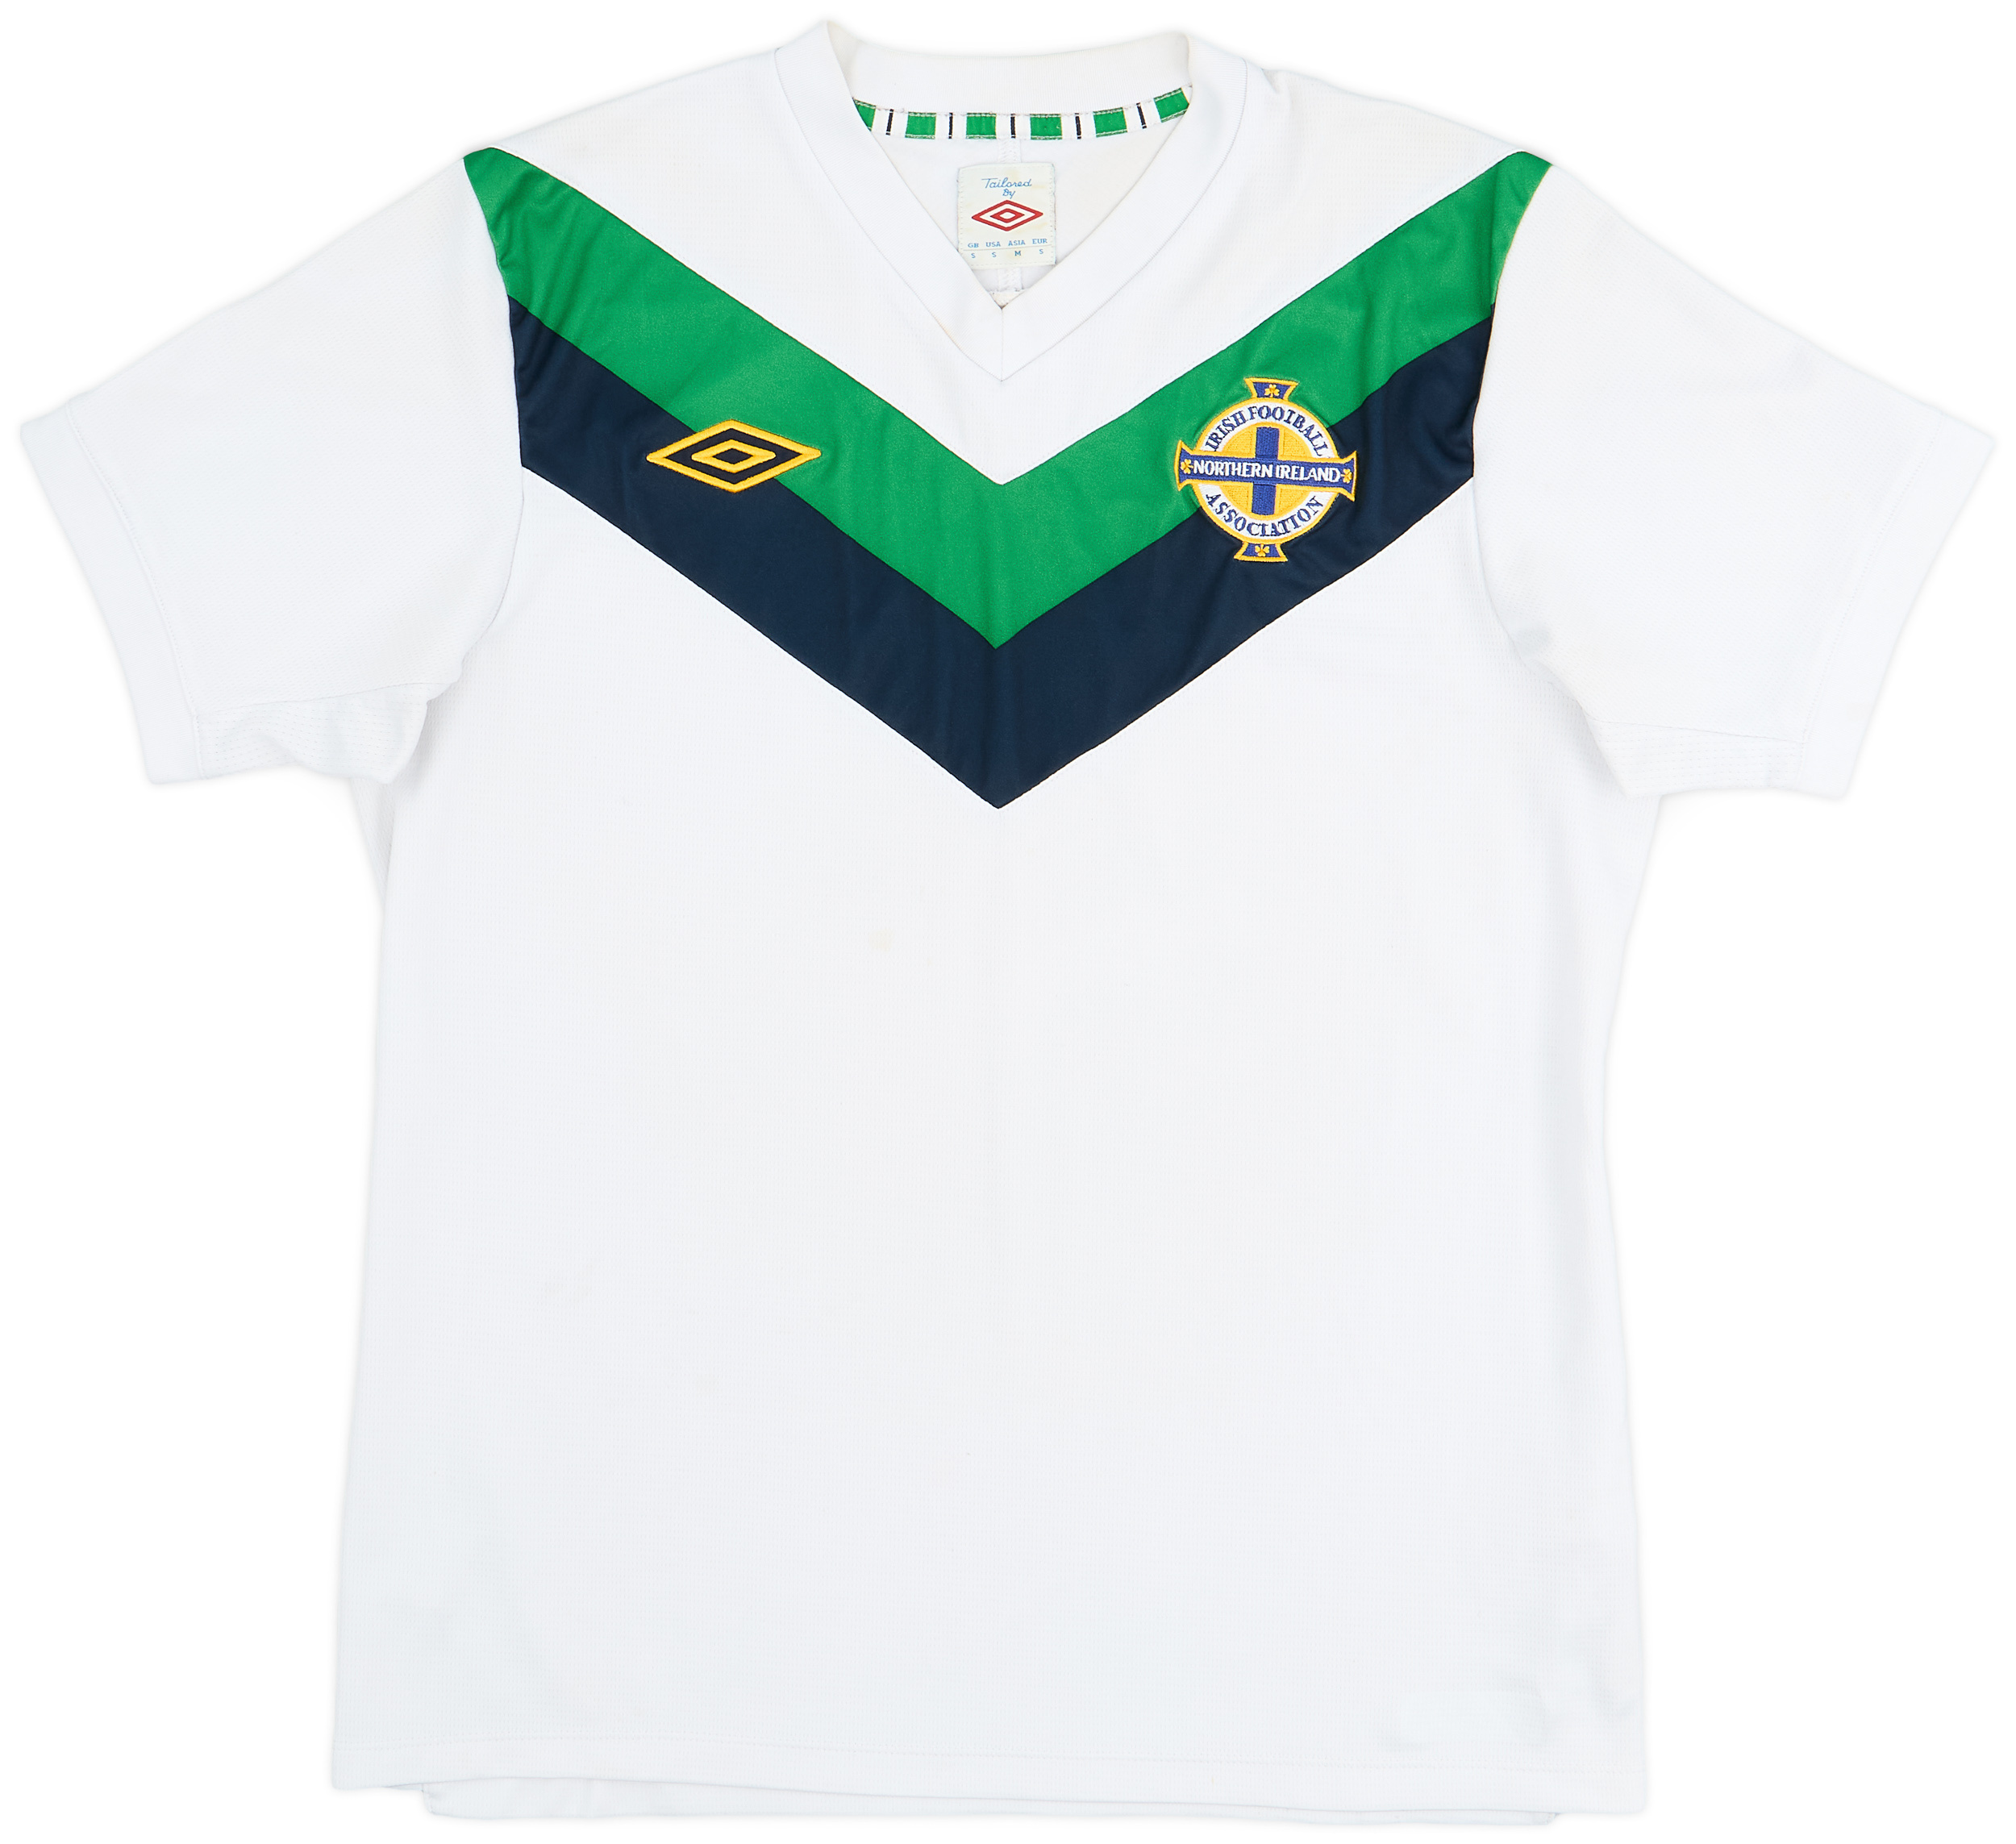 2011-12 Northern Ireland Away Shirt - 6/10 - ()